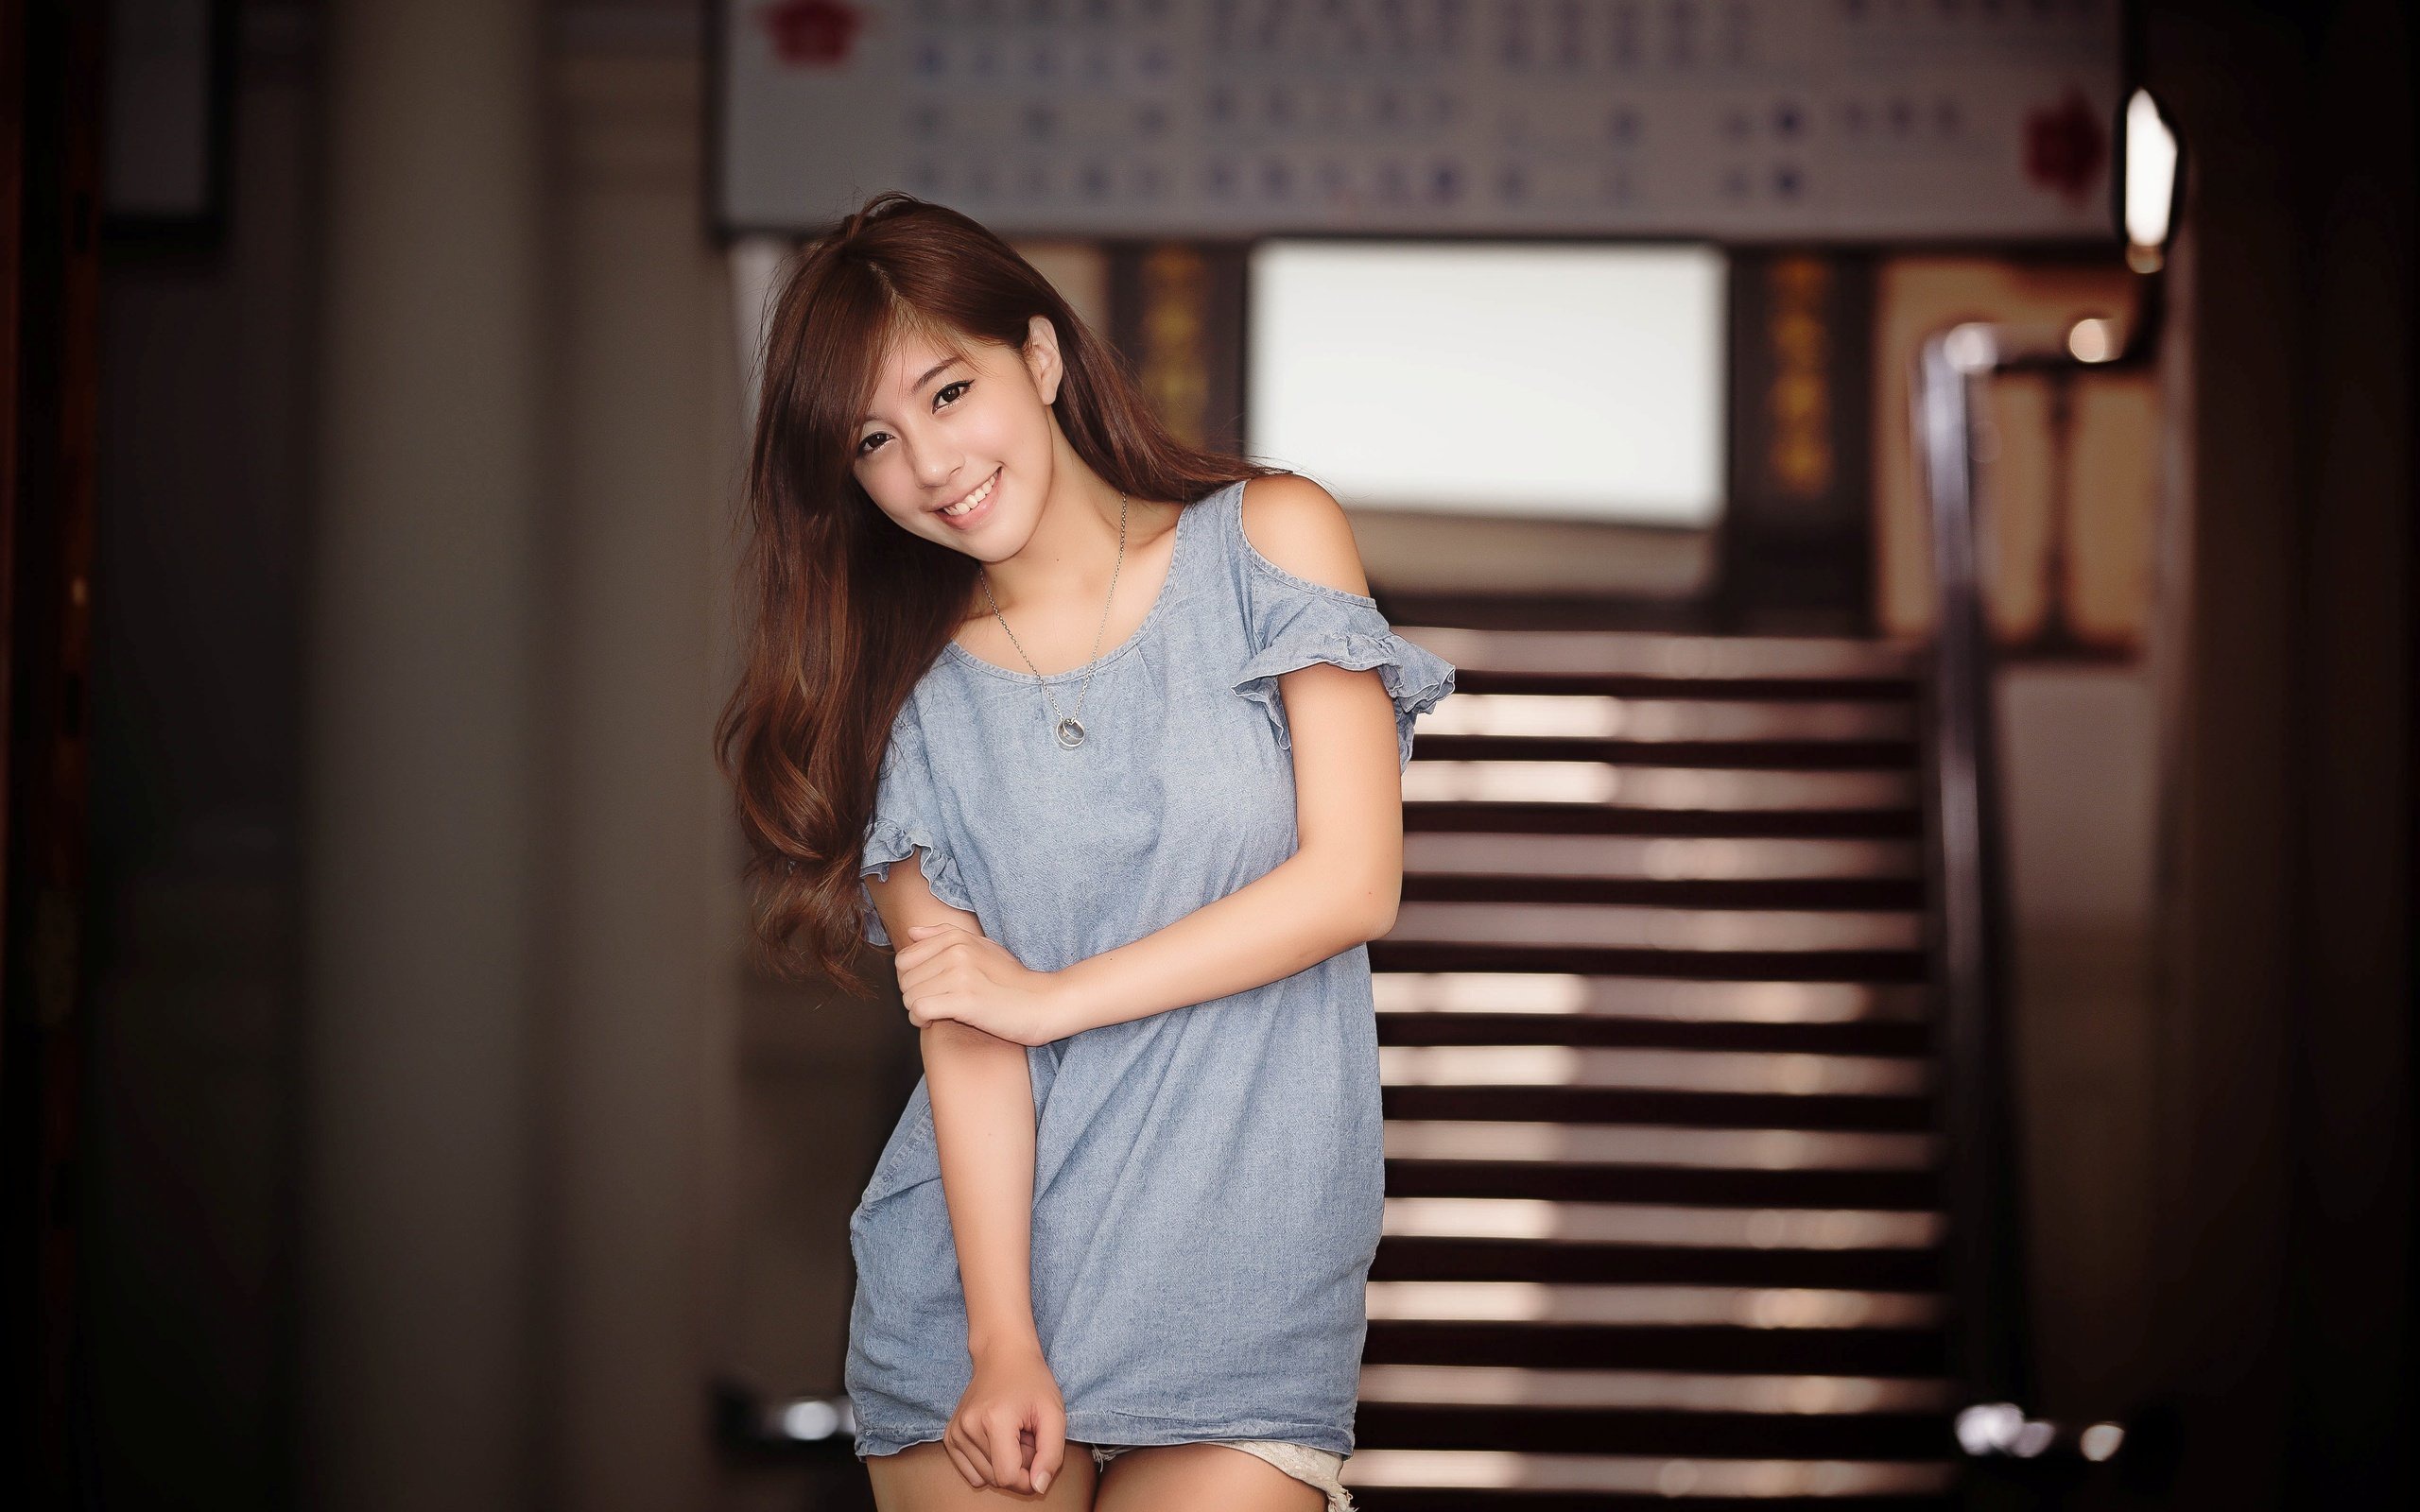 Asian Model Women Long Hair Brunette Grey Shirt Shorts Depth Of Field Stairs Railings Smiling Jeans  2560x1600